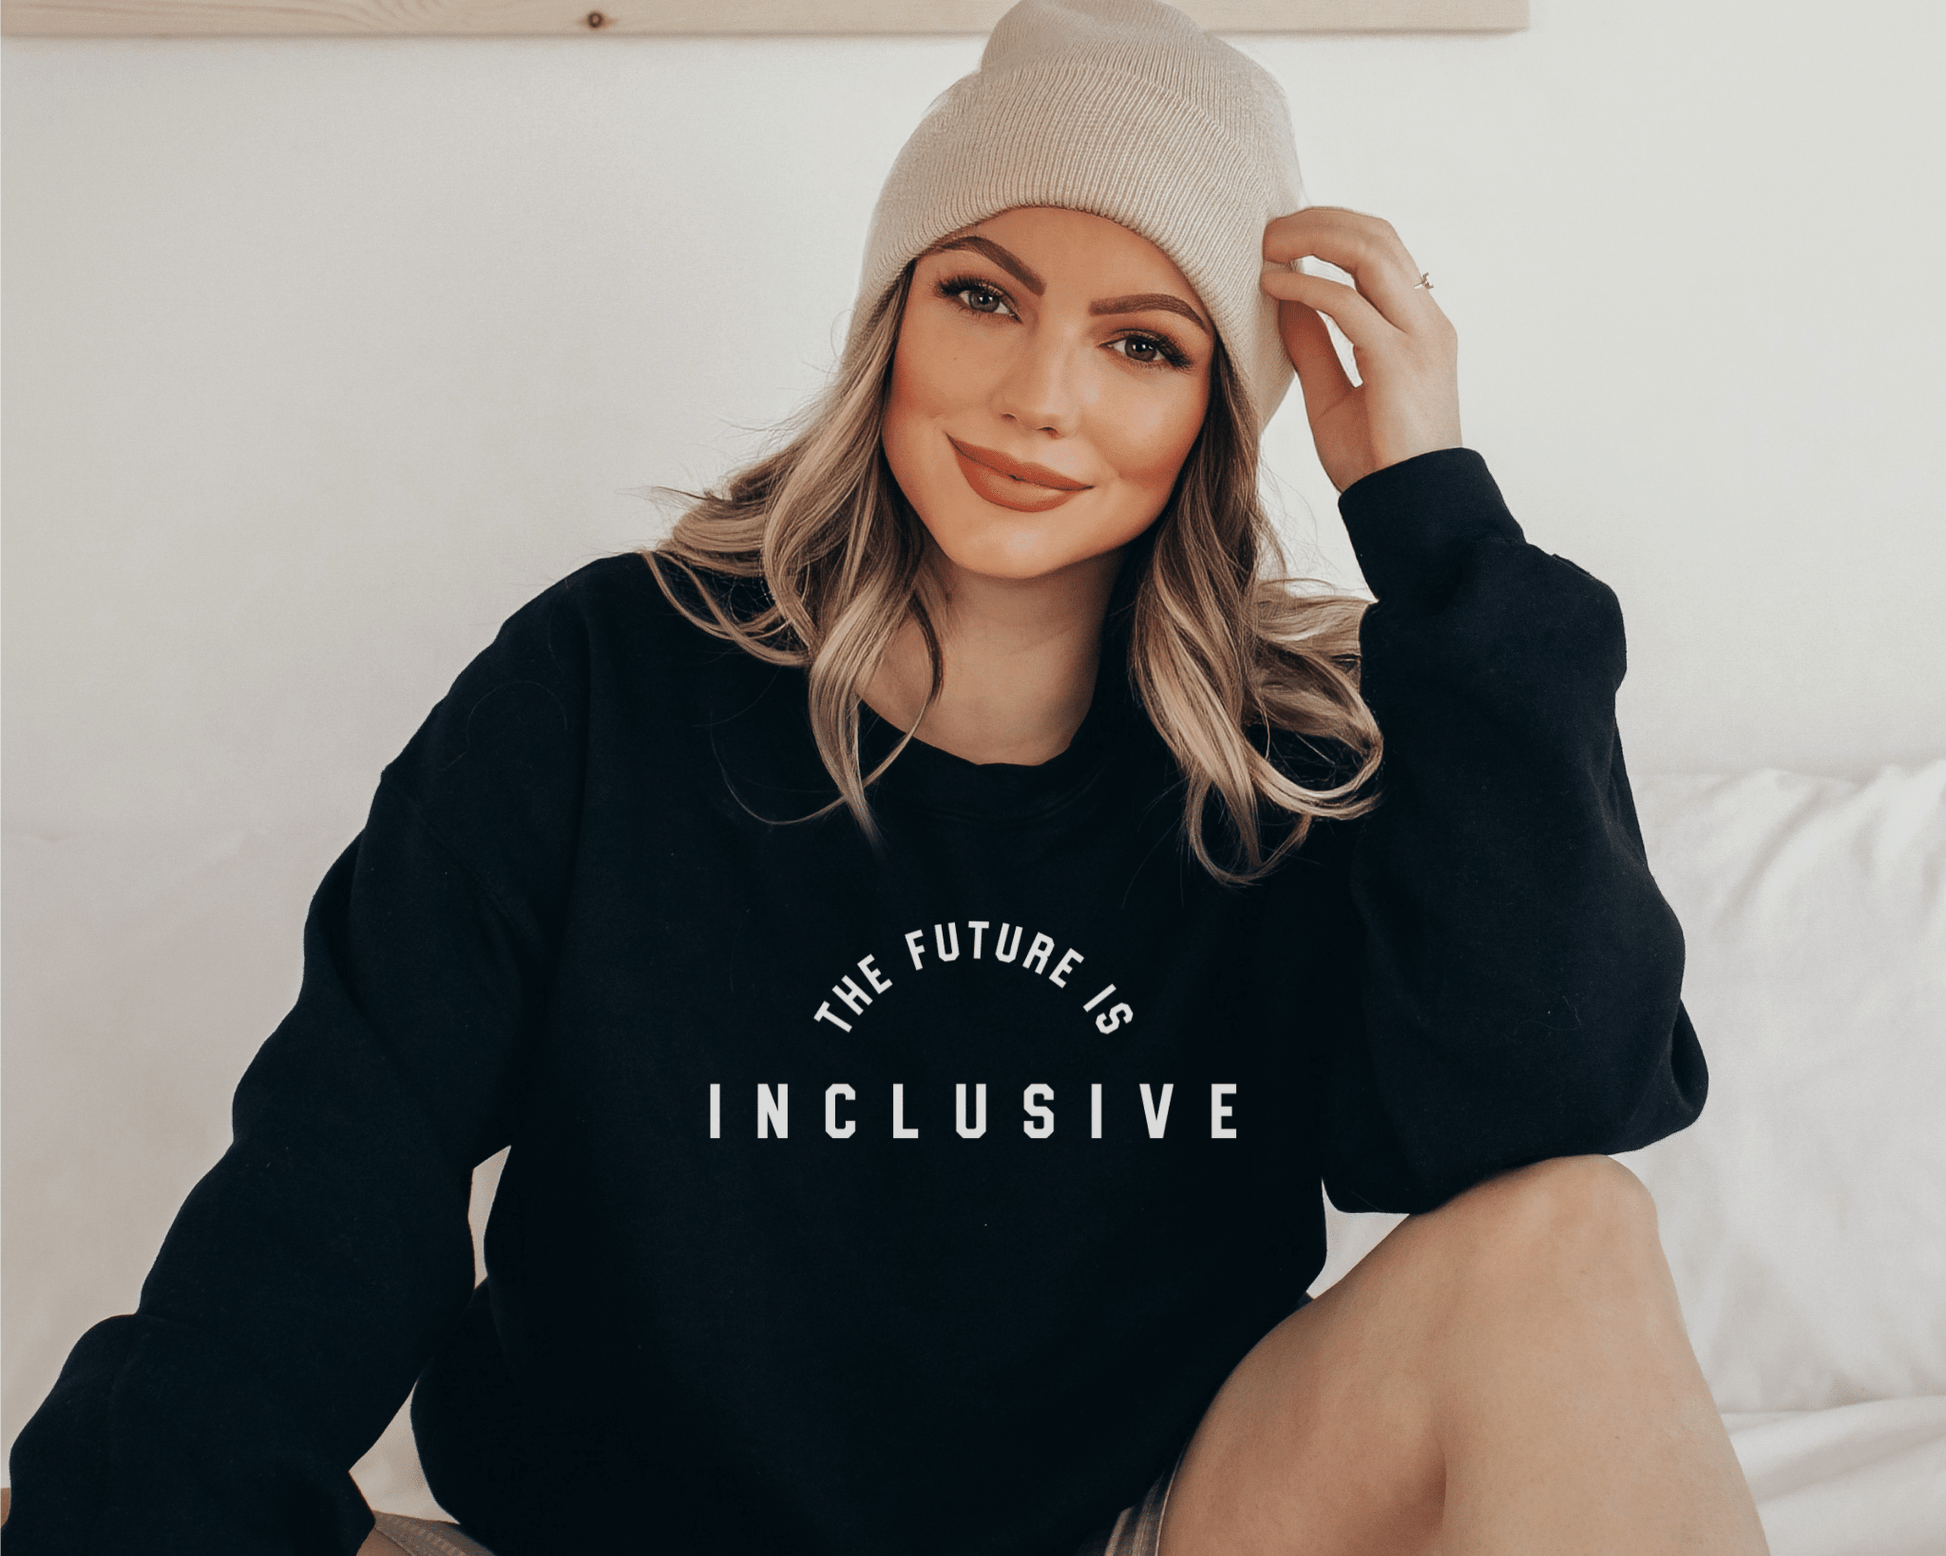 The Future is Inclusive Sweatshirt in Black